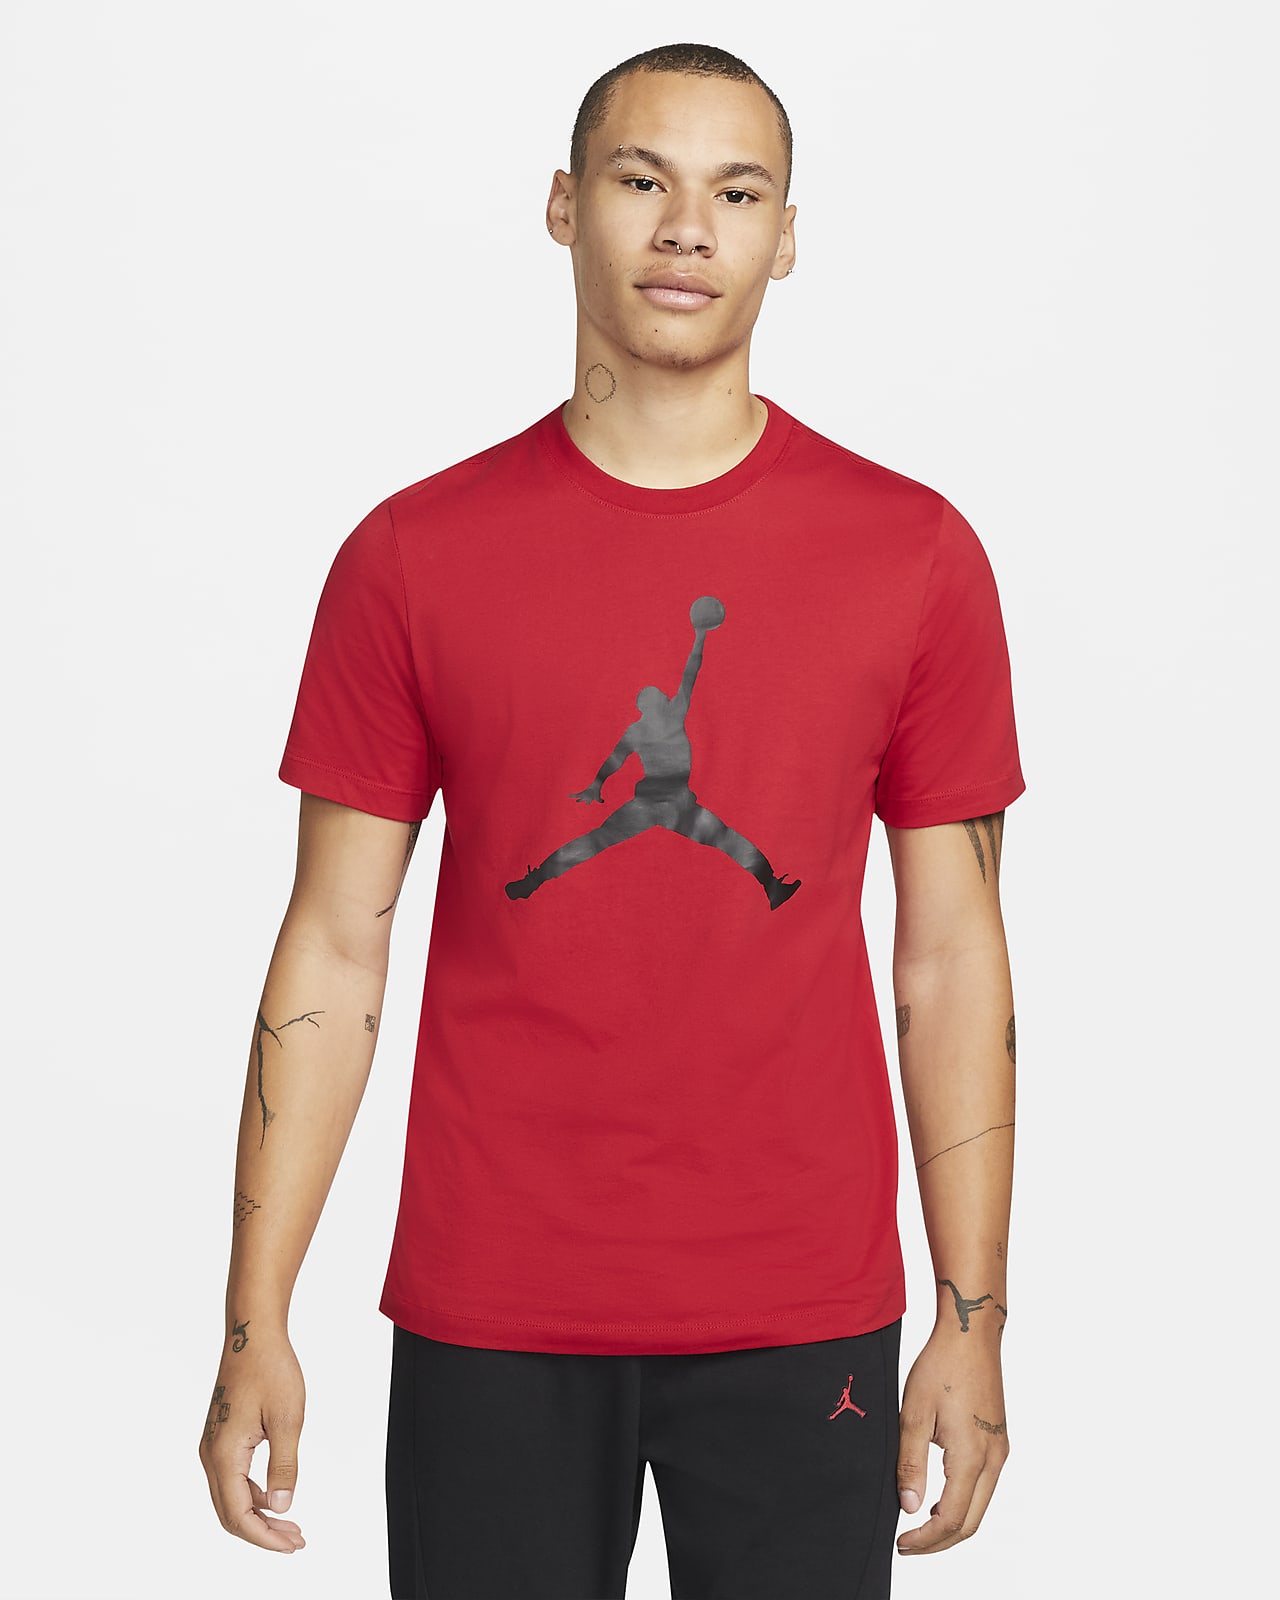 Camiseta Jordan Jumpman